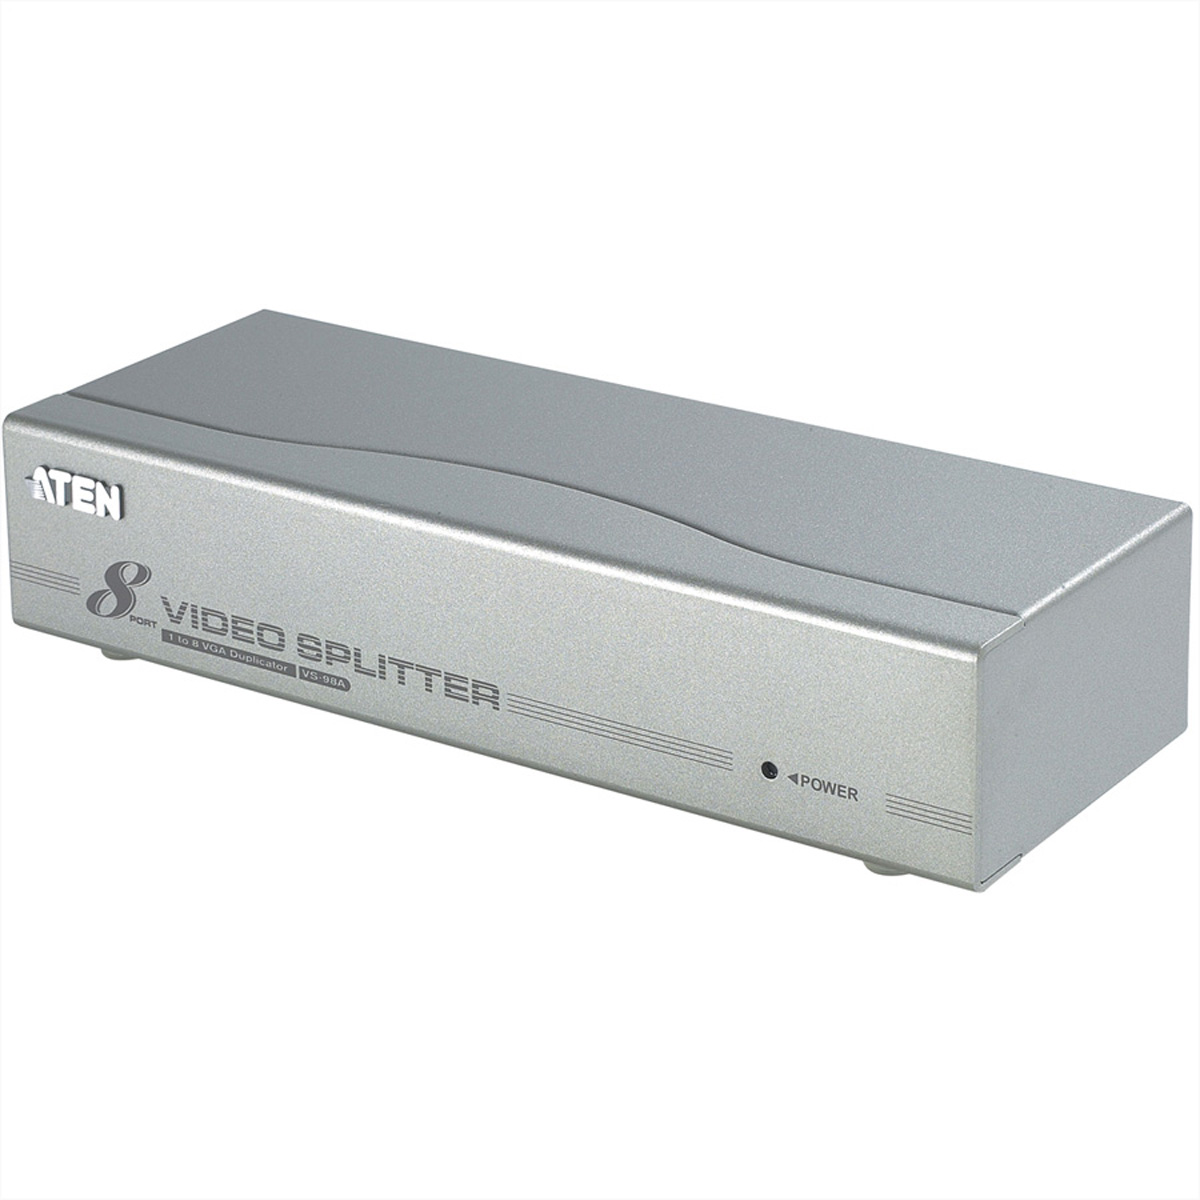 VGA-Video-Splitter 300MHz, VGA VS98A ATEN Video-Splitter, 8fach